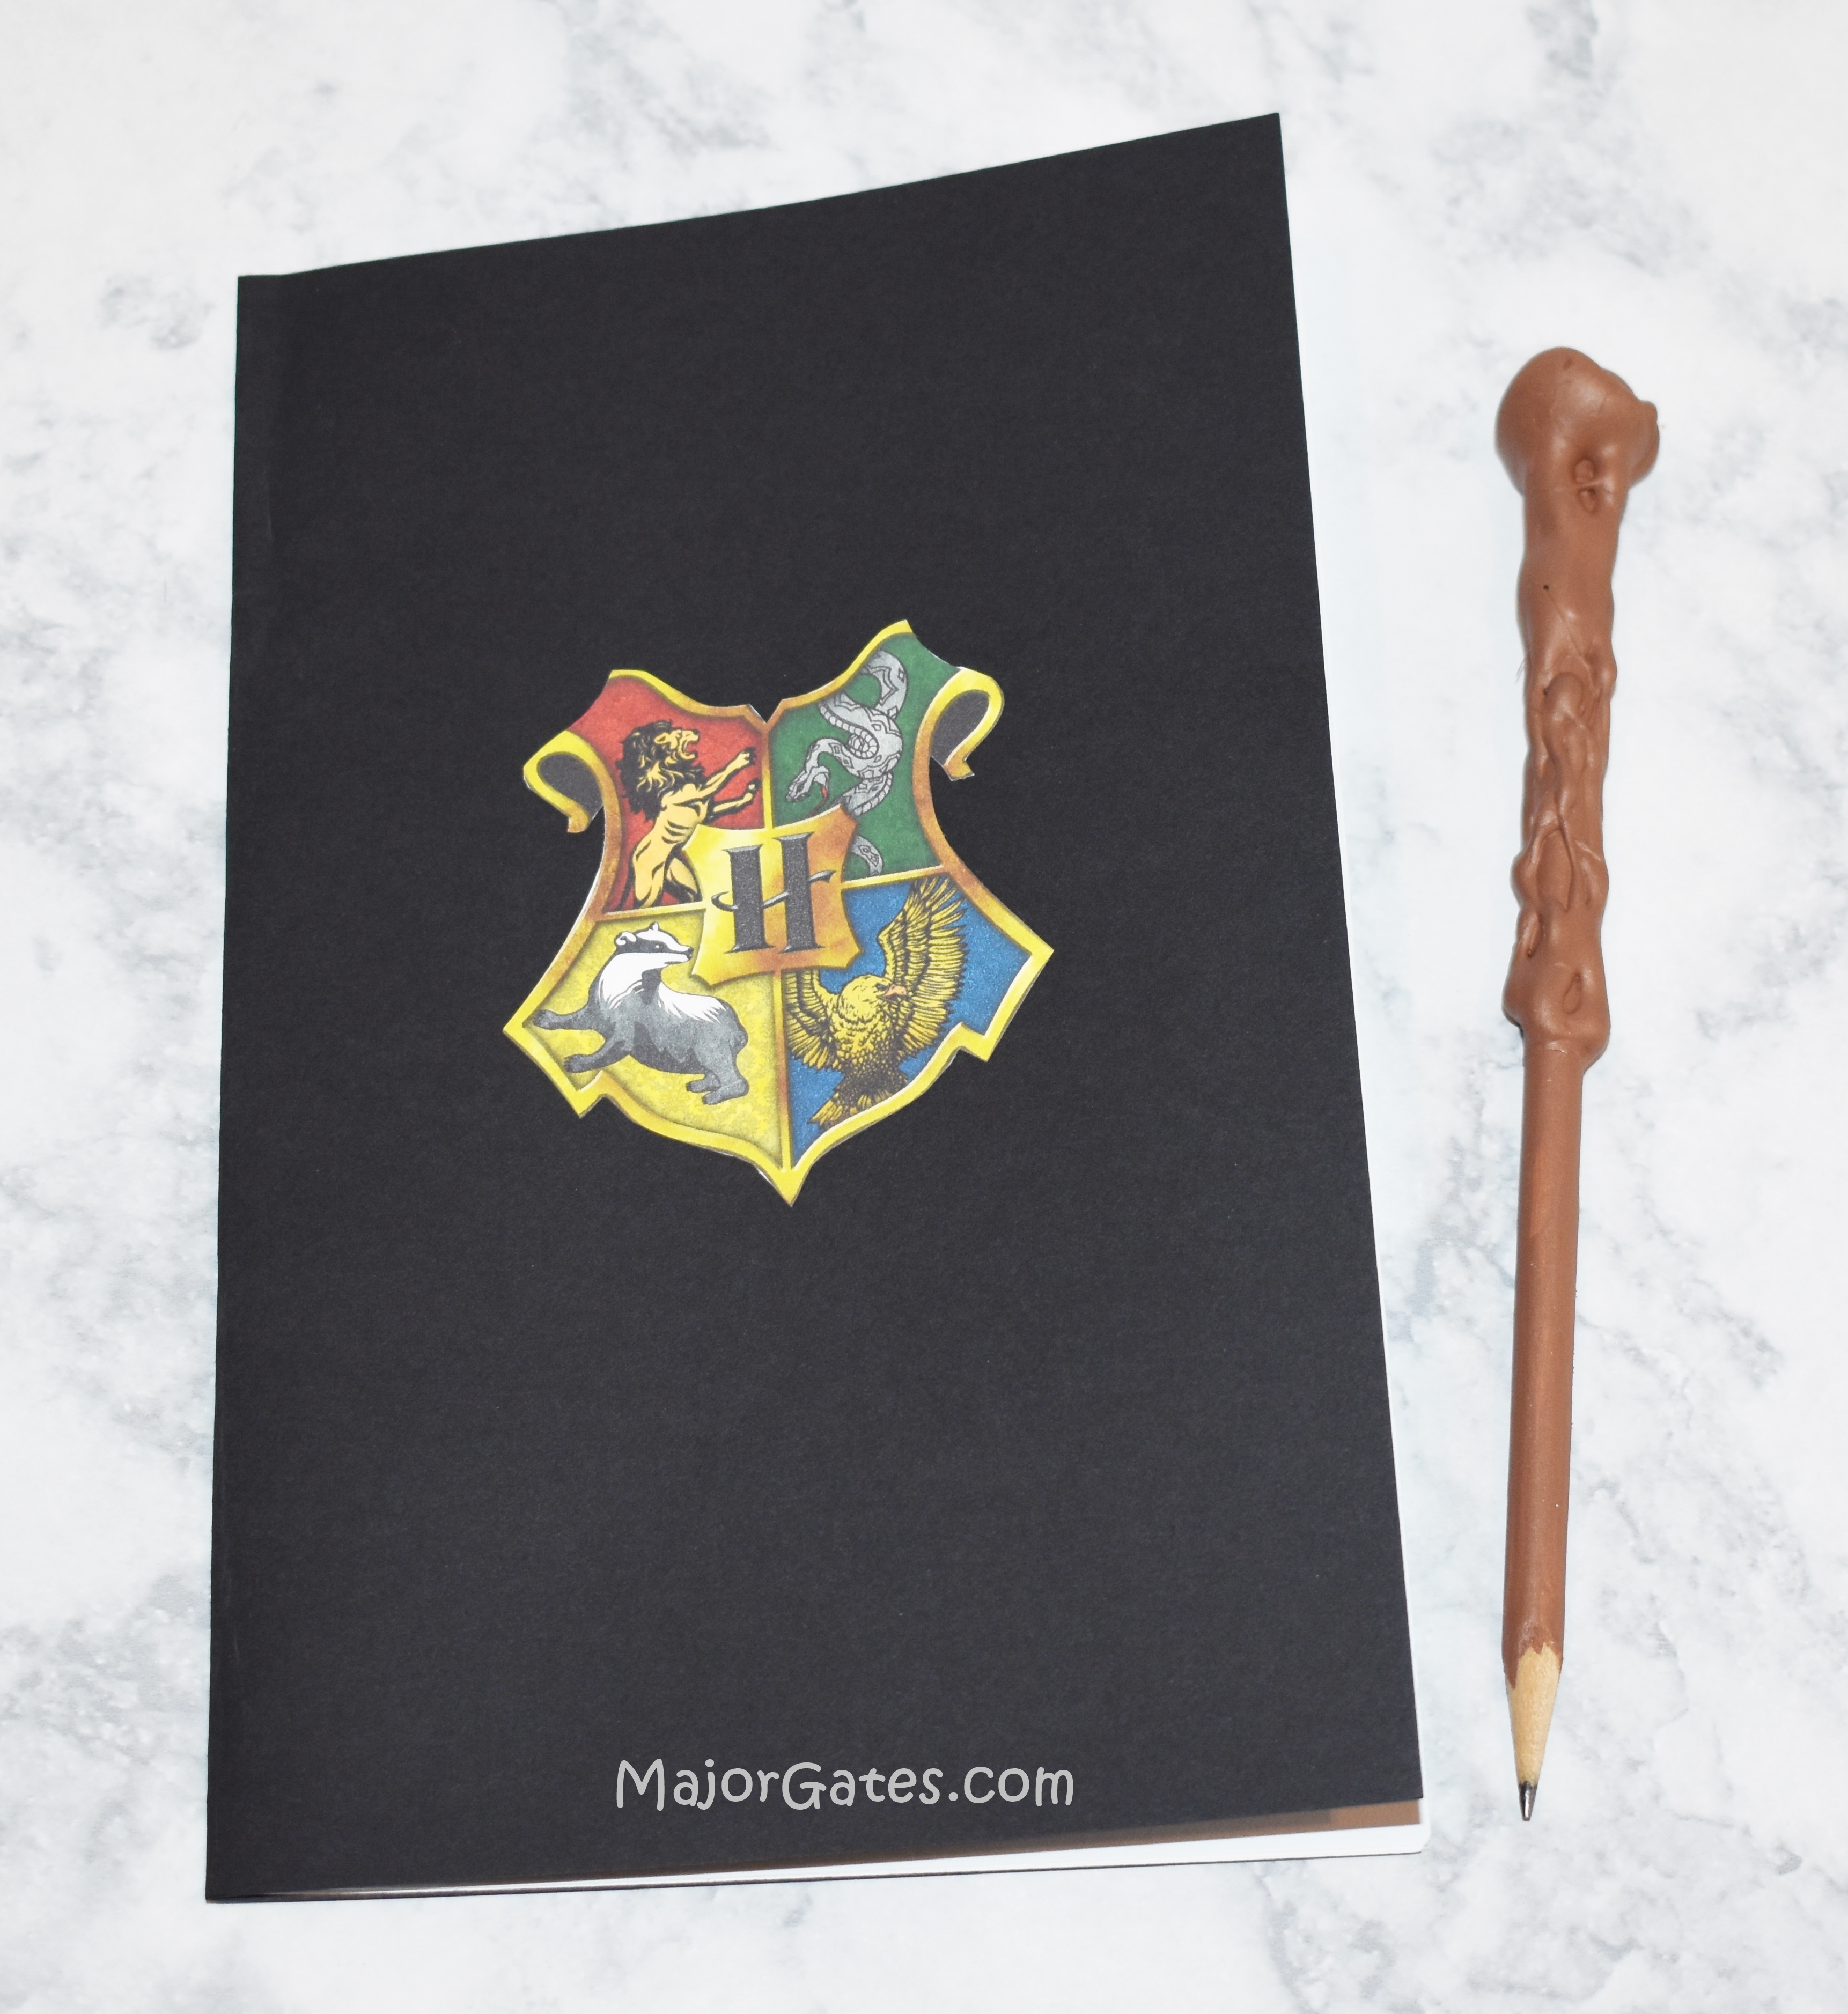 Harry Potter Wand Pencils